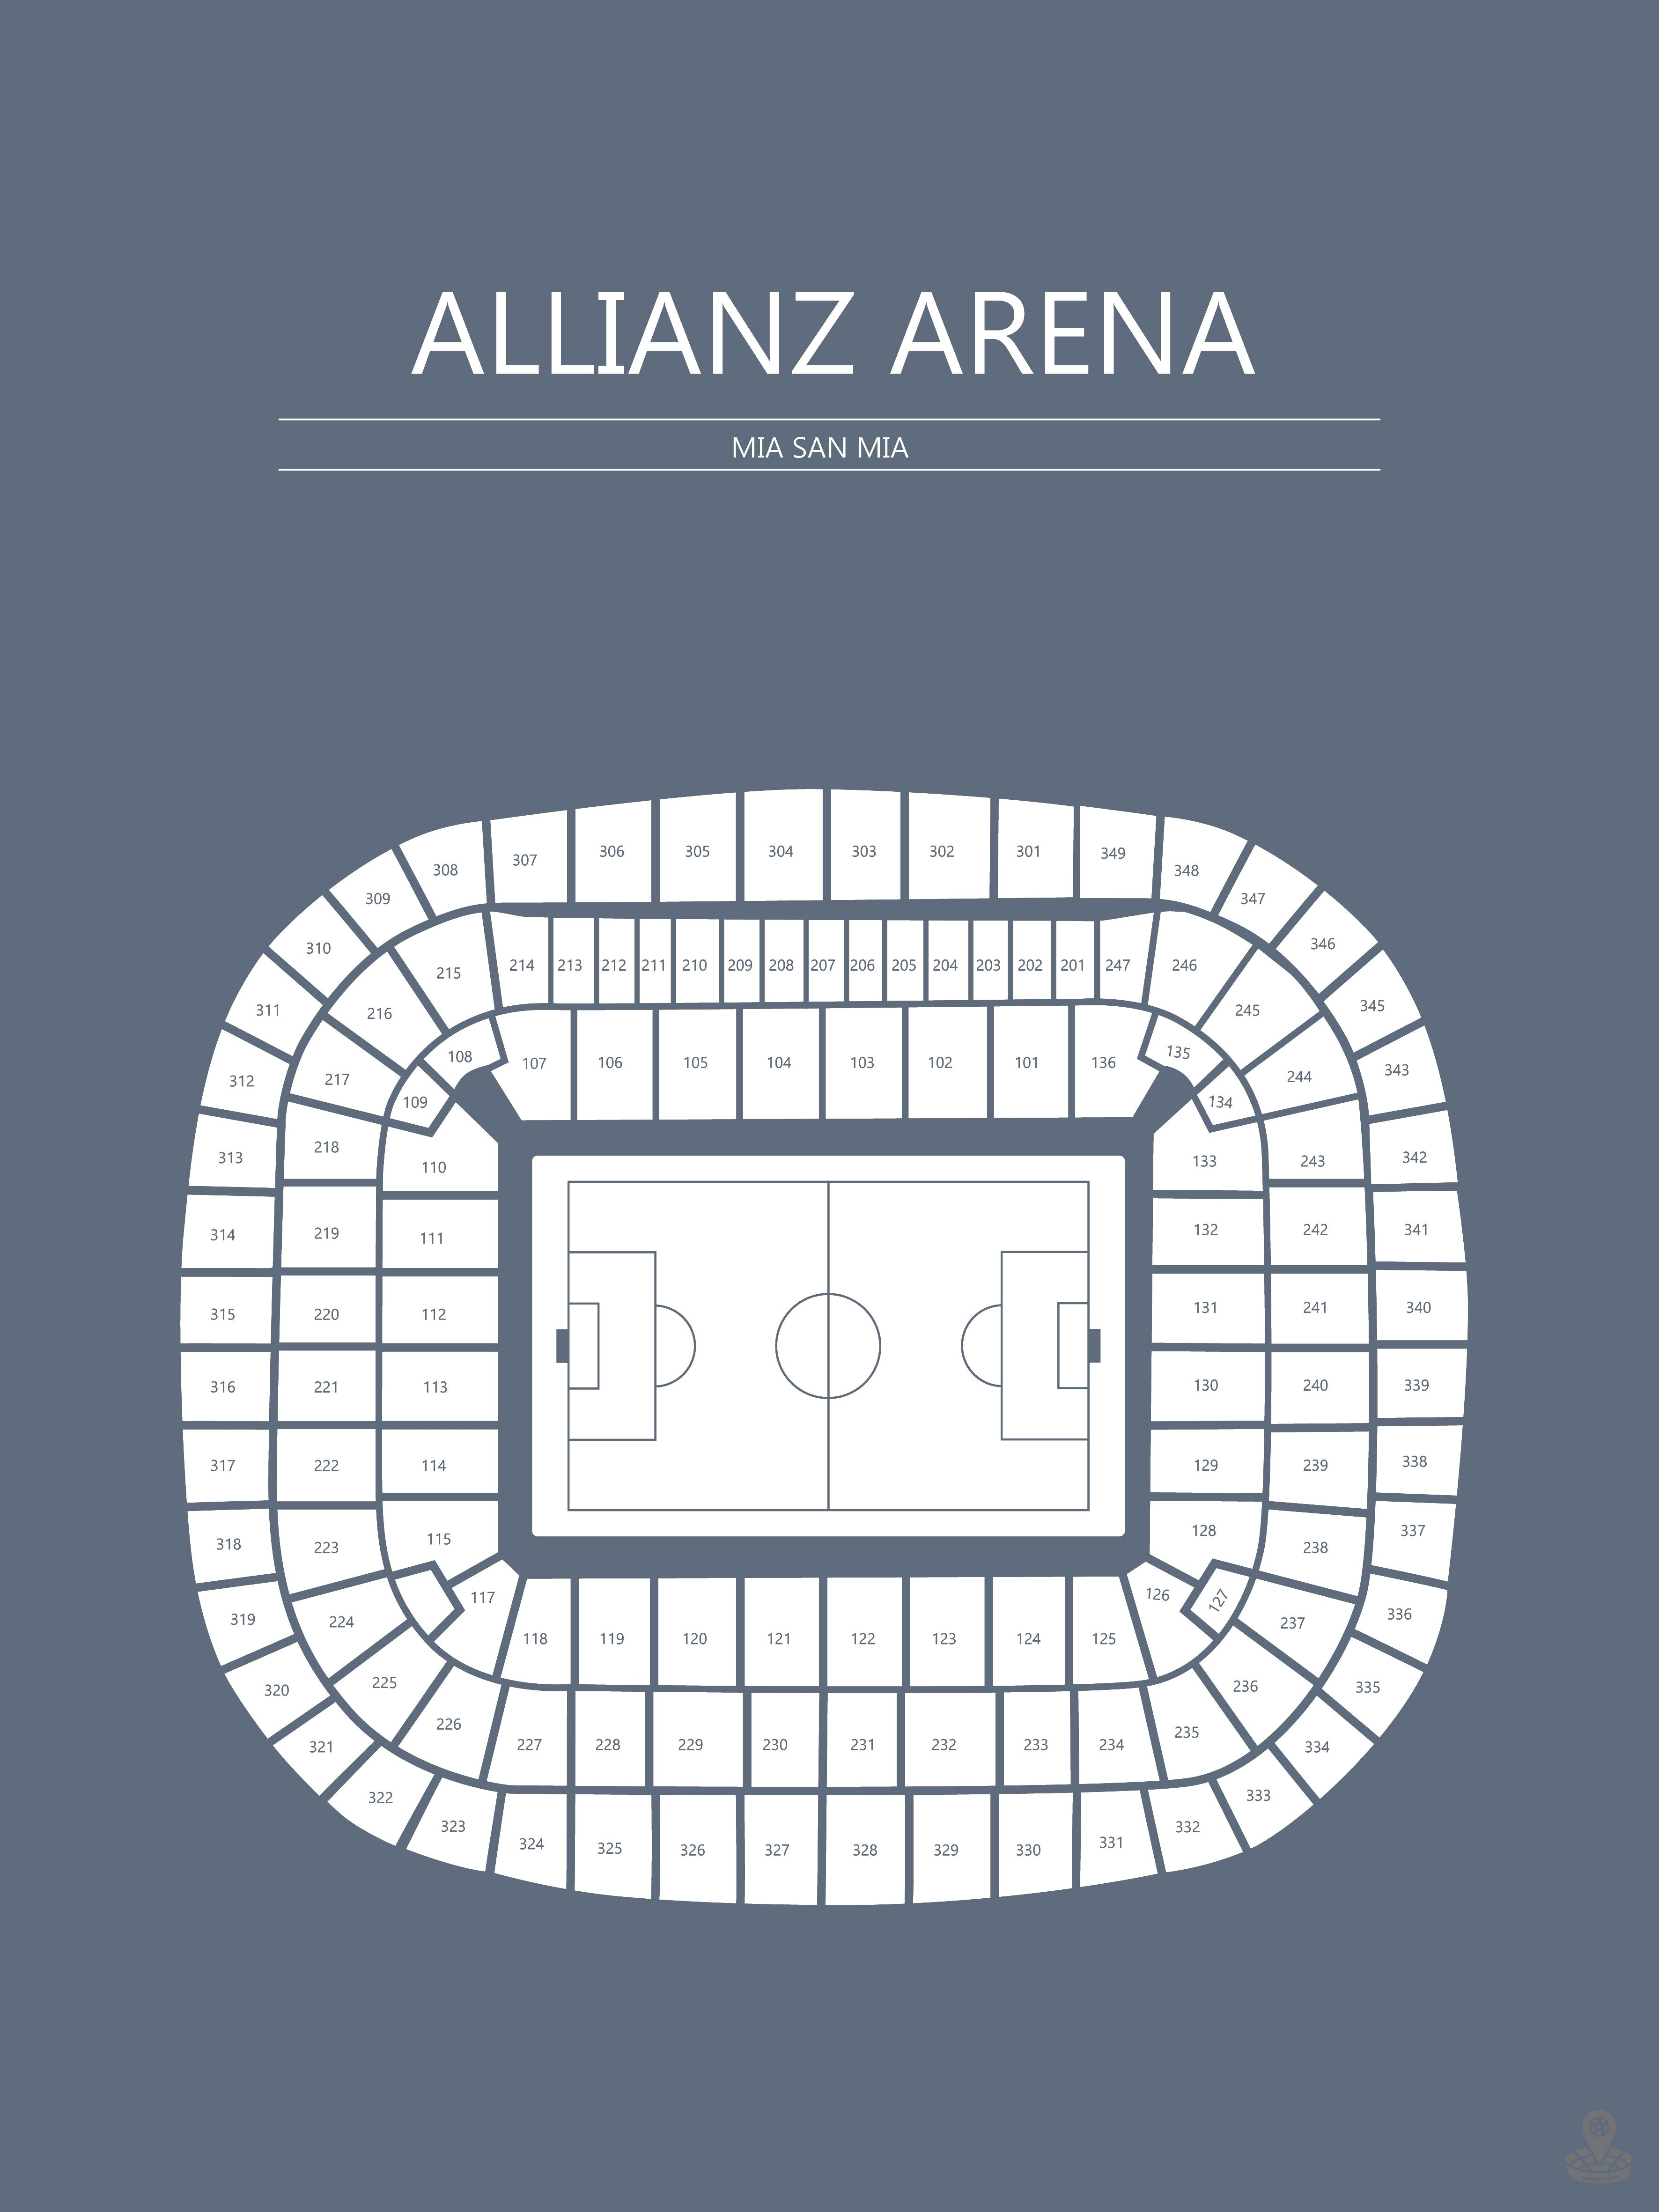 Fodbold plakat Bayern München Allianz Arena Blågrå